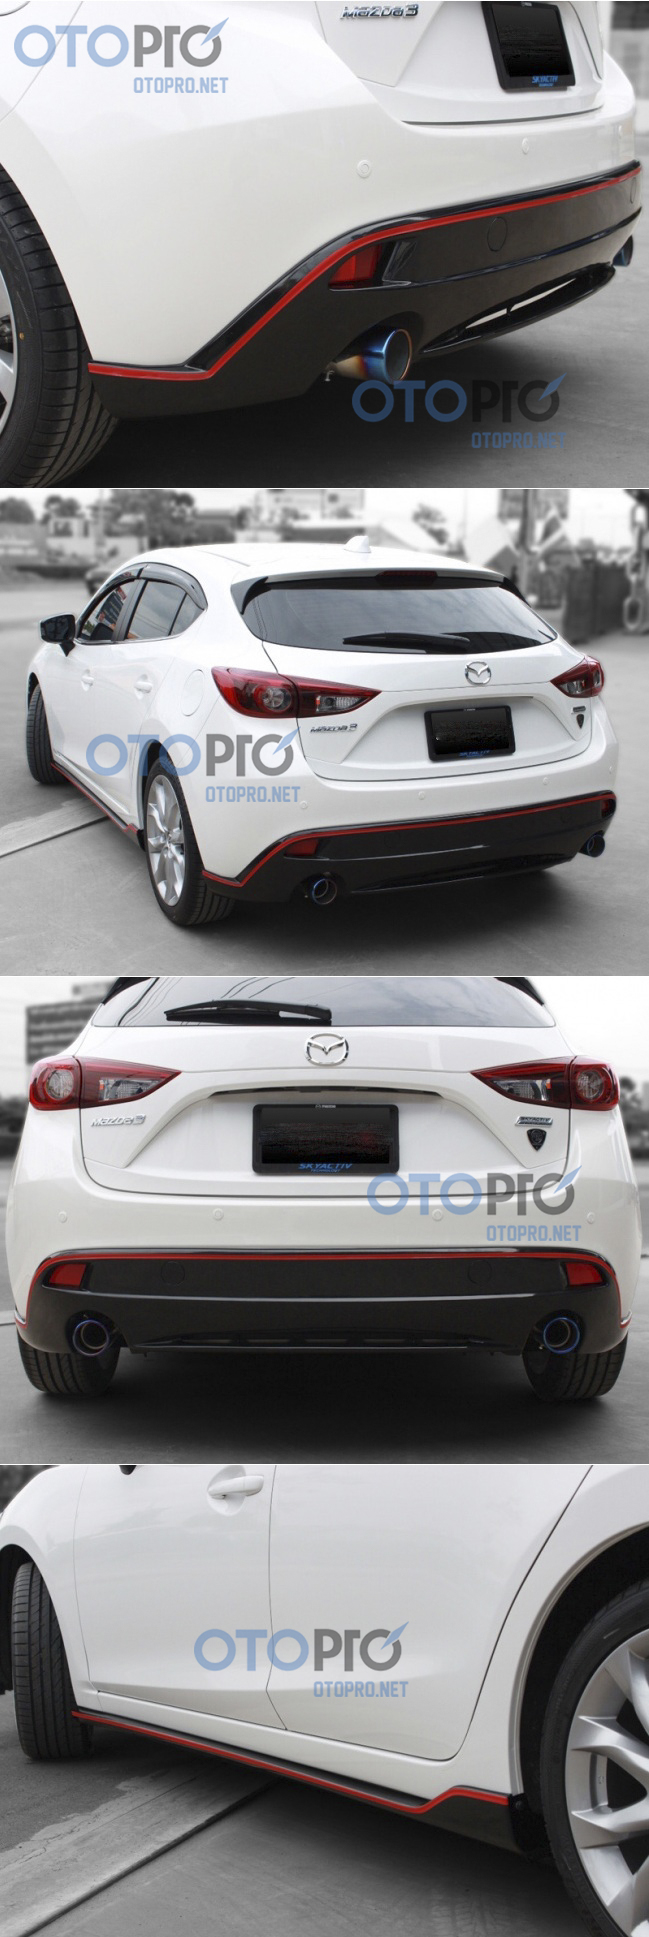 Bodylips cho xe Mazda 3 2014 Hatchback mẫu Aero